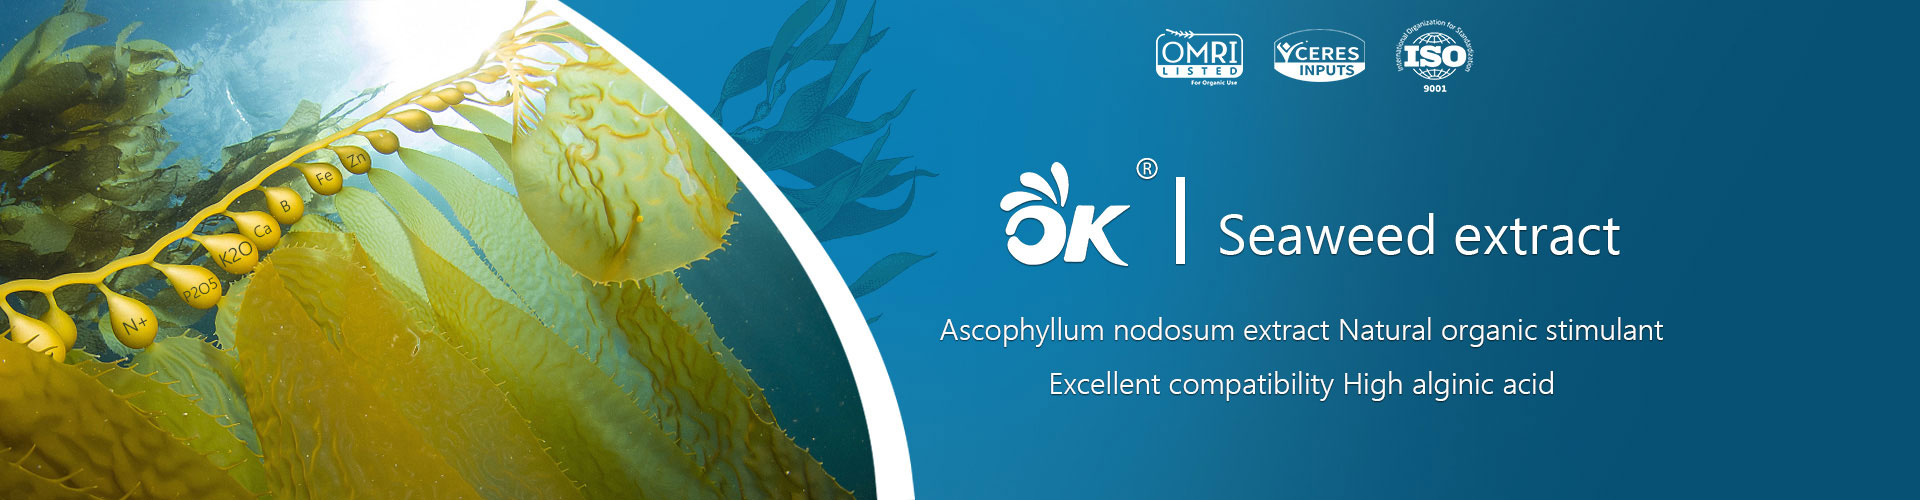 x-humate-seaweed-extract-ascophyllum-nodosum-organic-stimulant-alginic-acid-fertilizer-omri-ceres-manufacturer